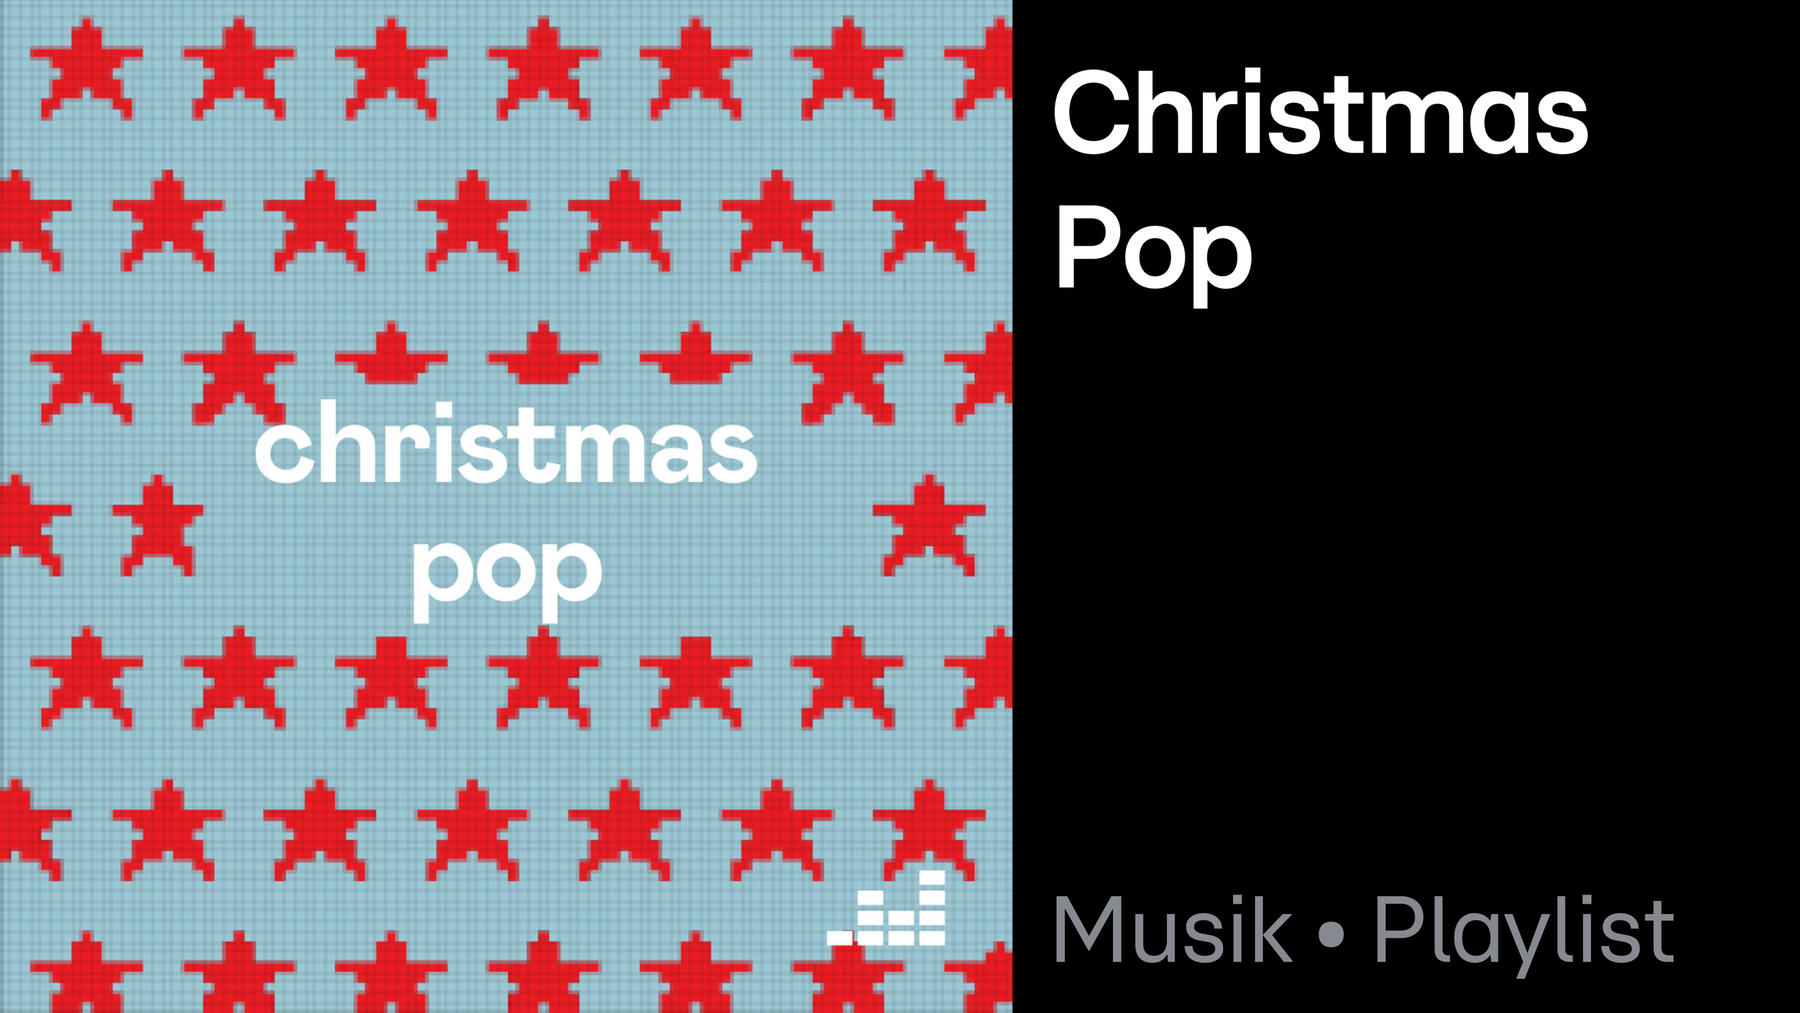 Playlist: Christmas Pop